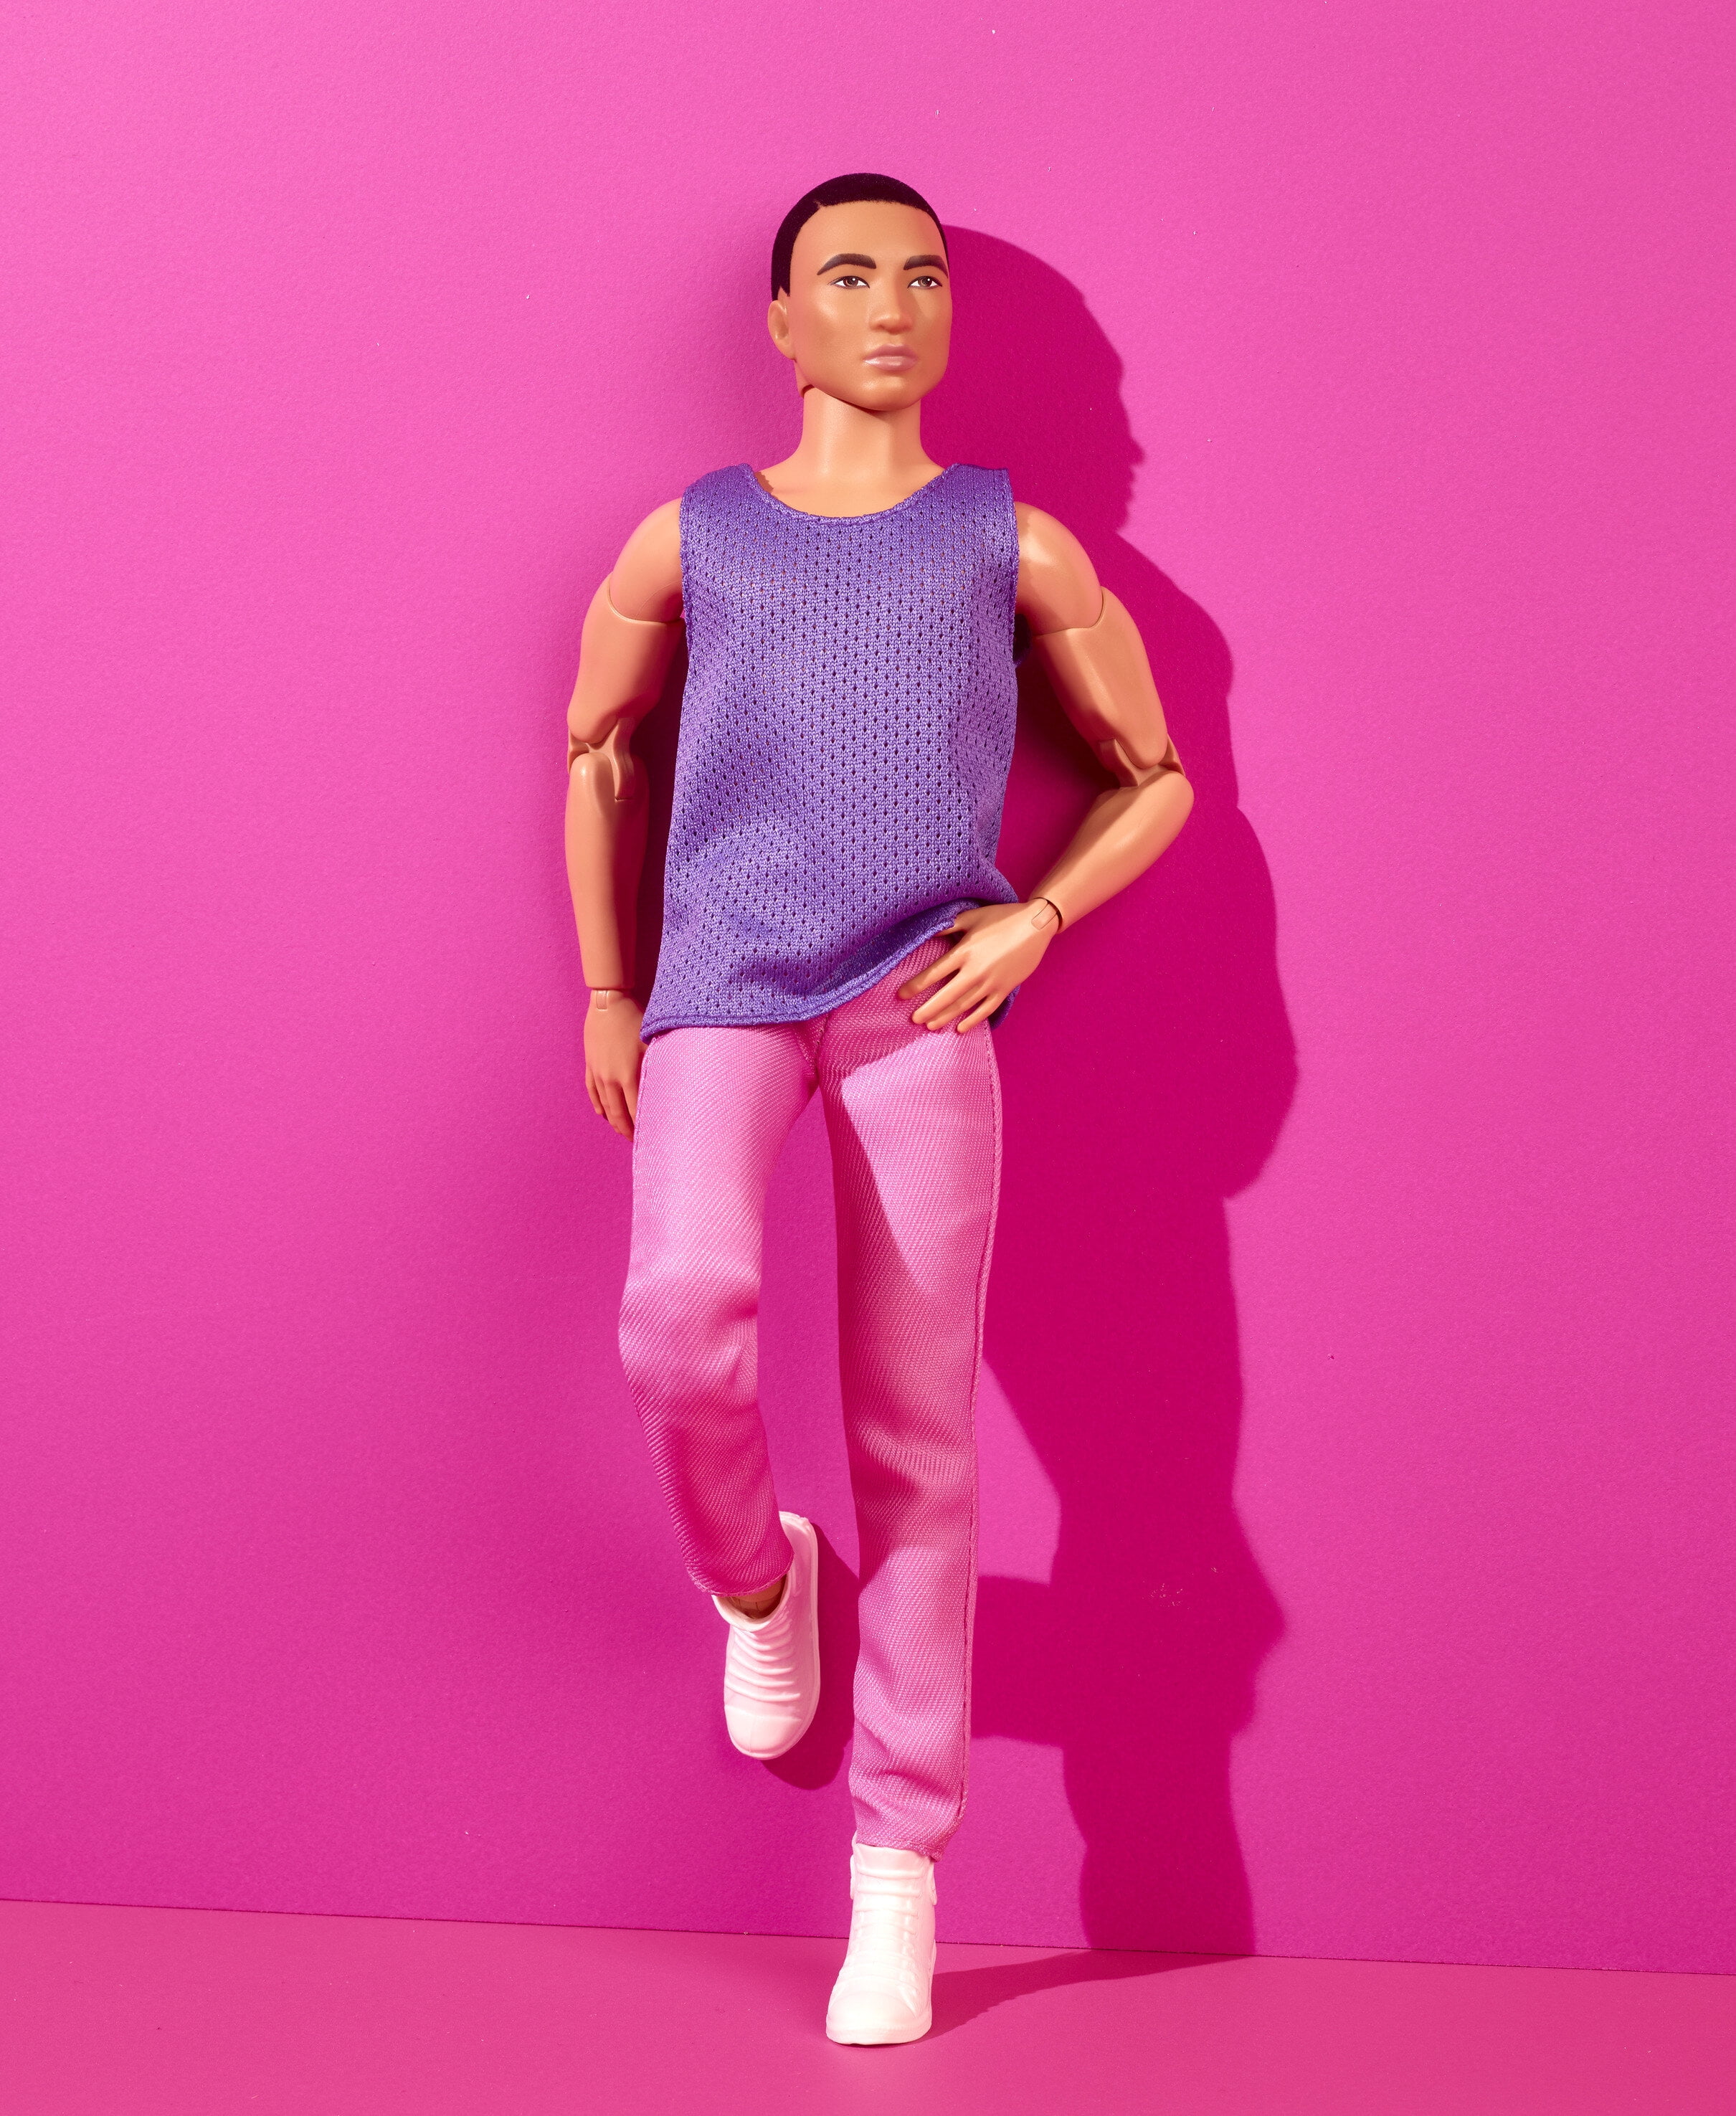 2023 New Ken Doll Barbie Looks Black Hair Purple Top with Pink